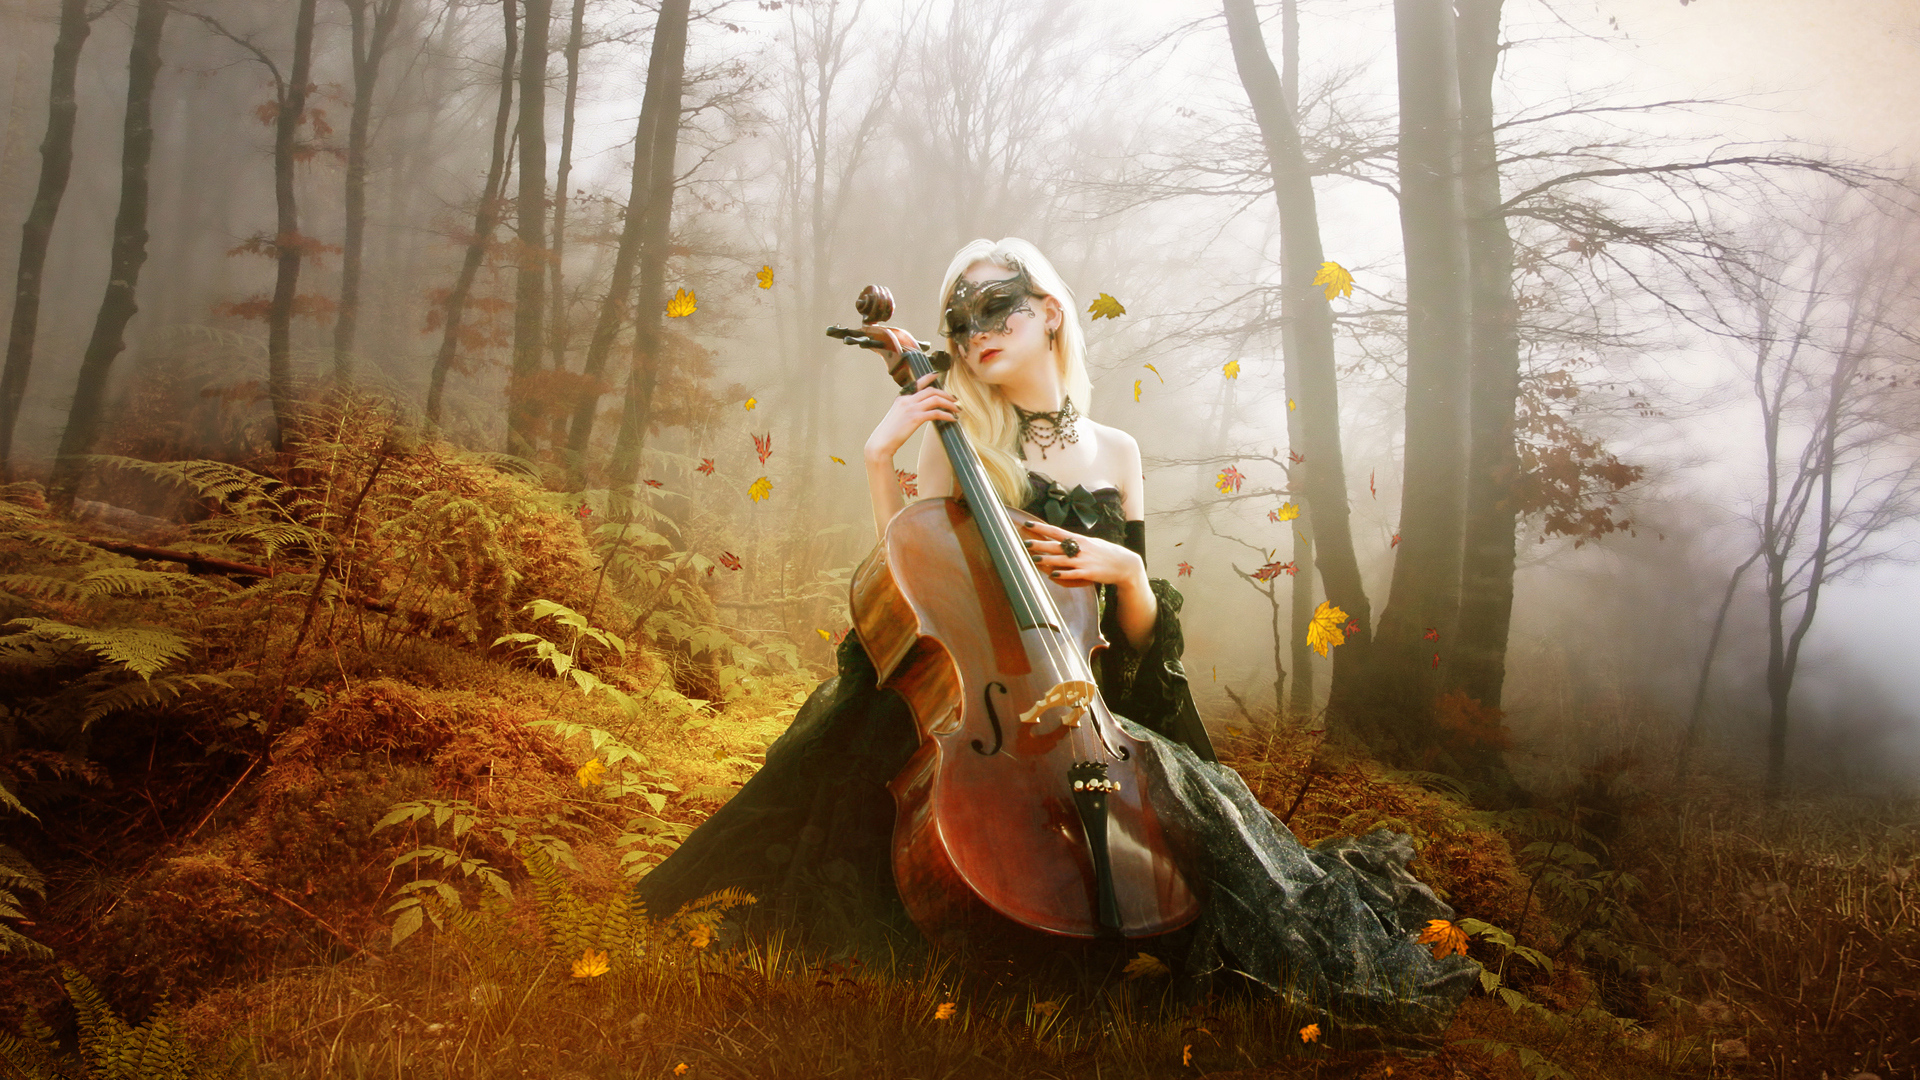 Gothic Model Maria Amanda Schaub with Her Cello ♪♫♪ by @xBiebersStyle